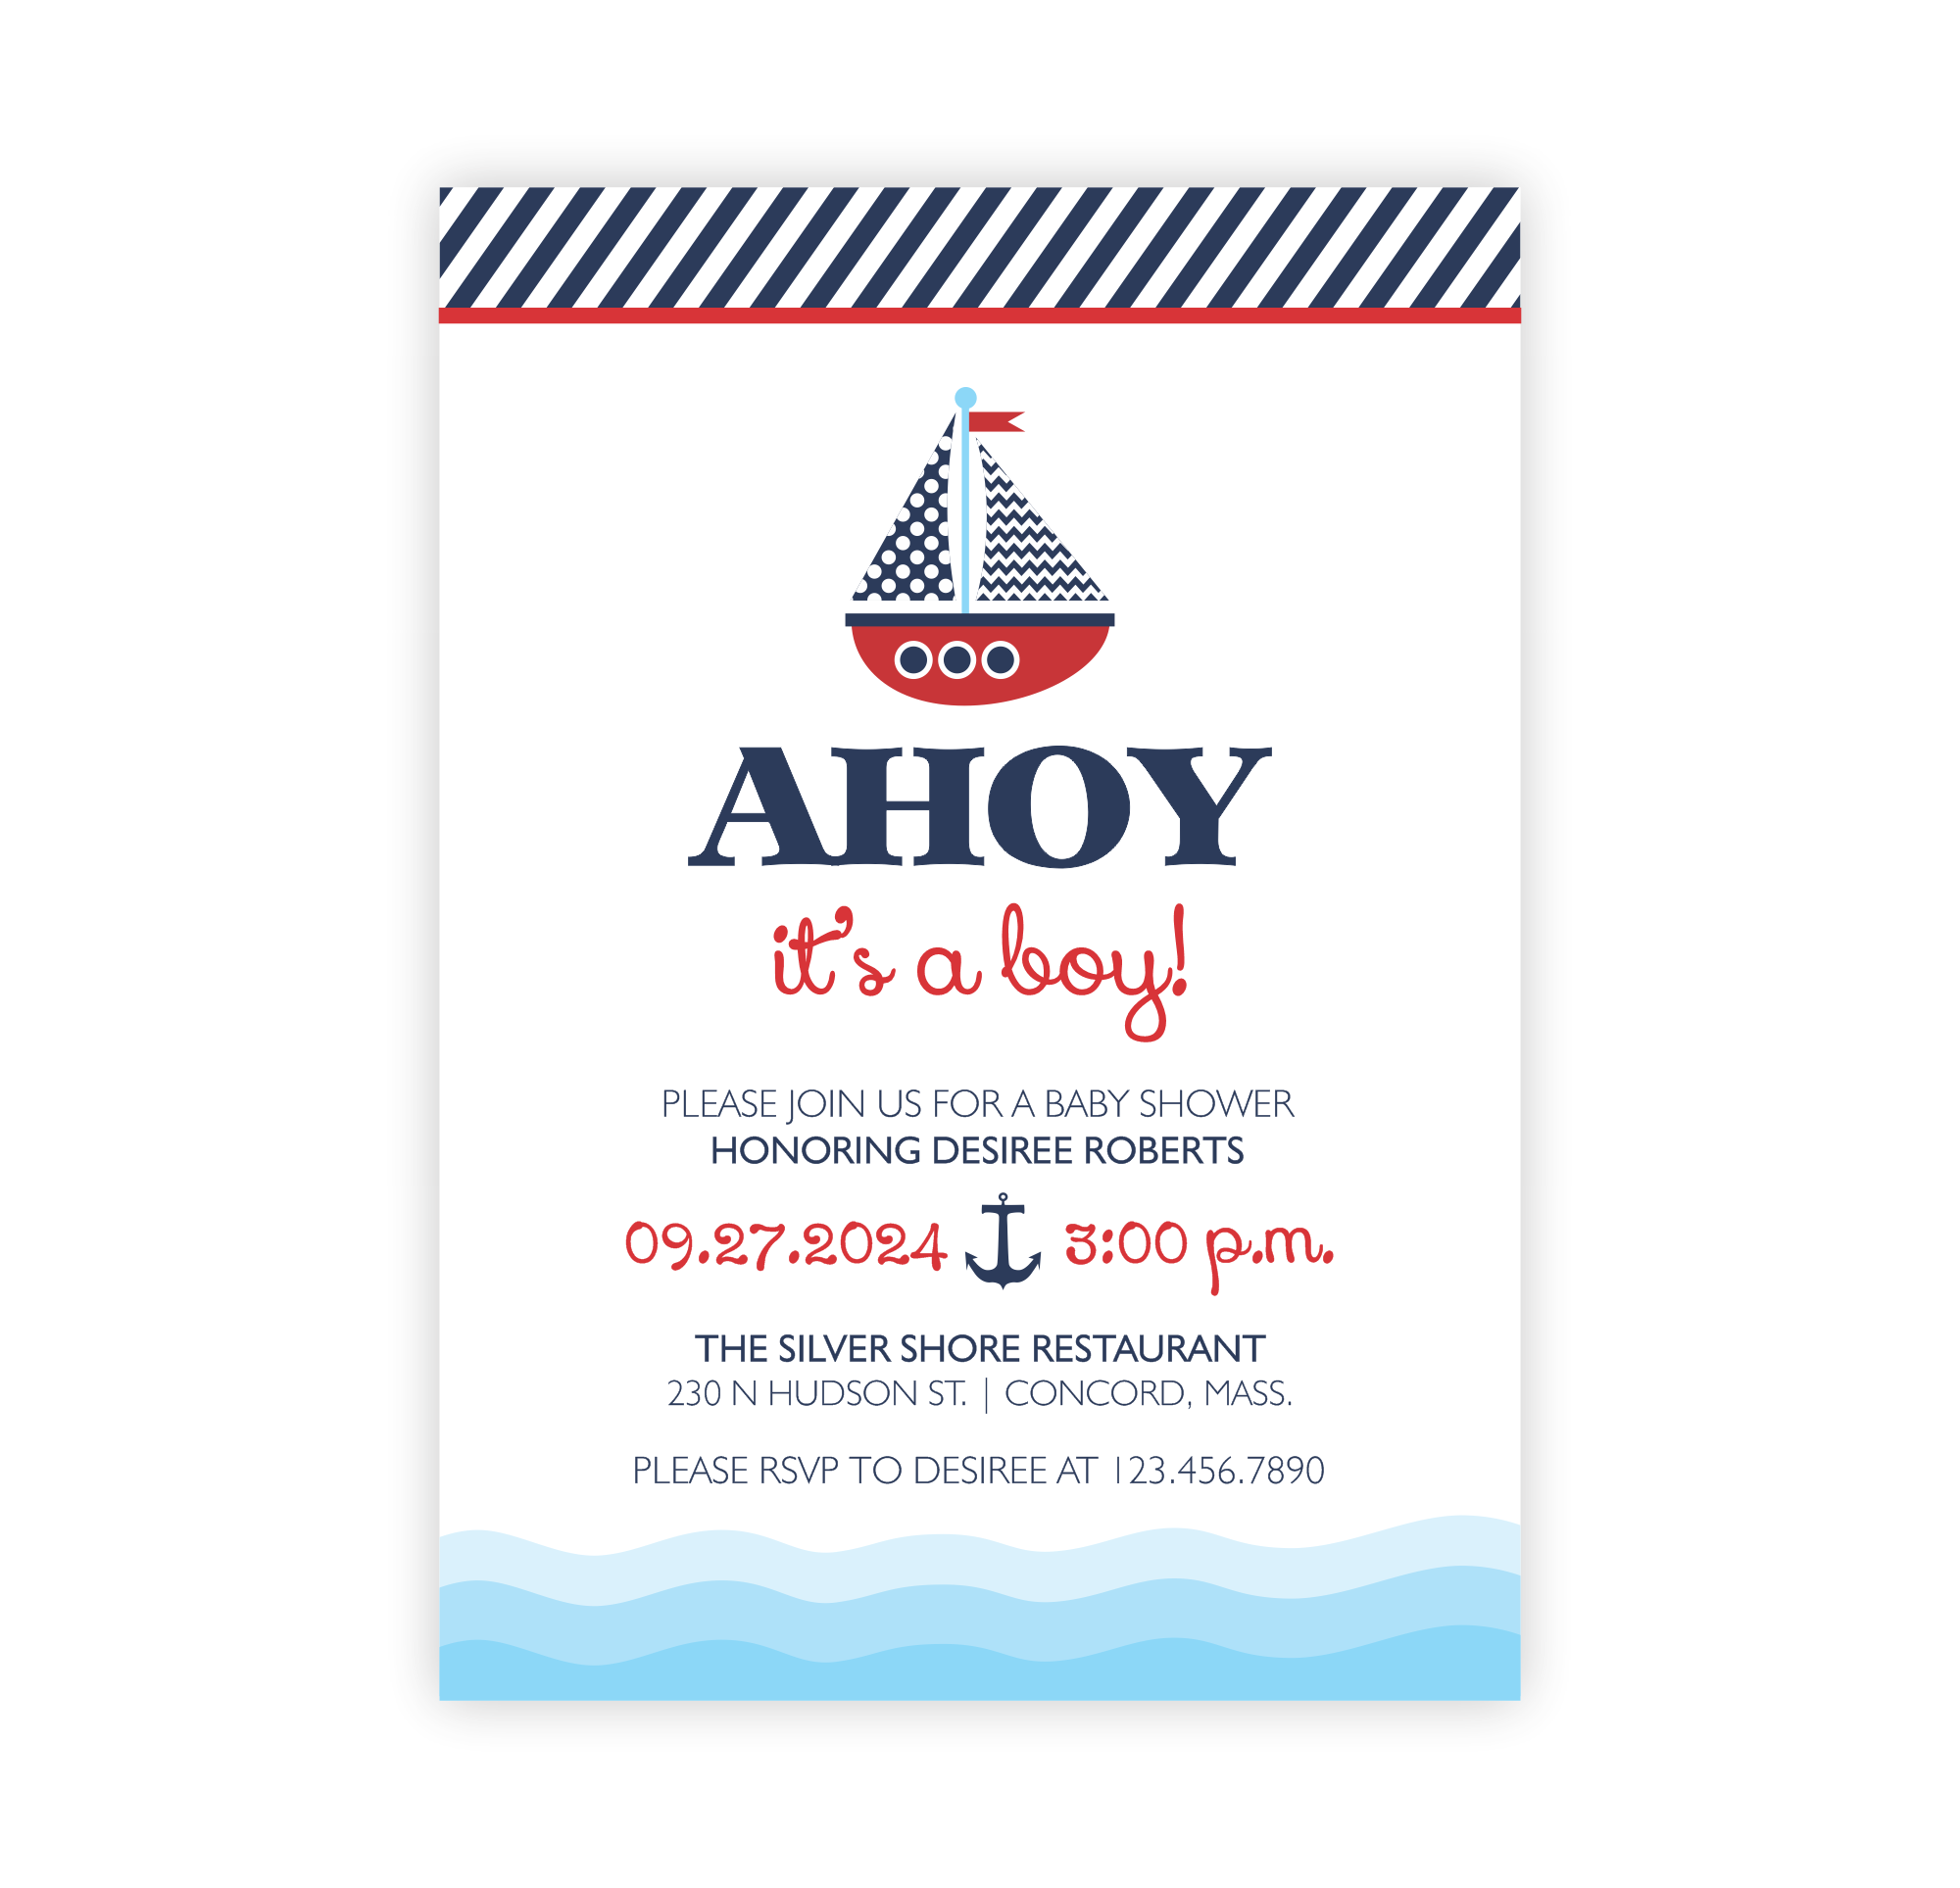 Ahoy! | Baby Shower Invite